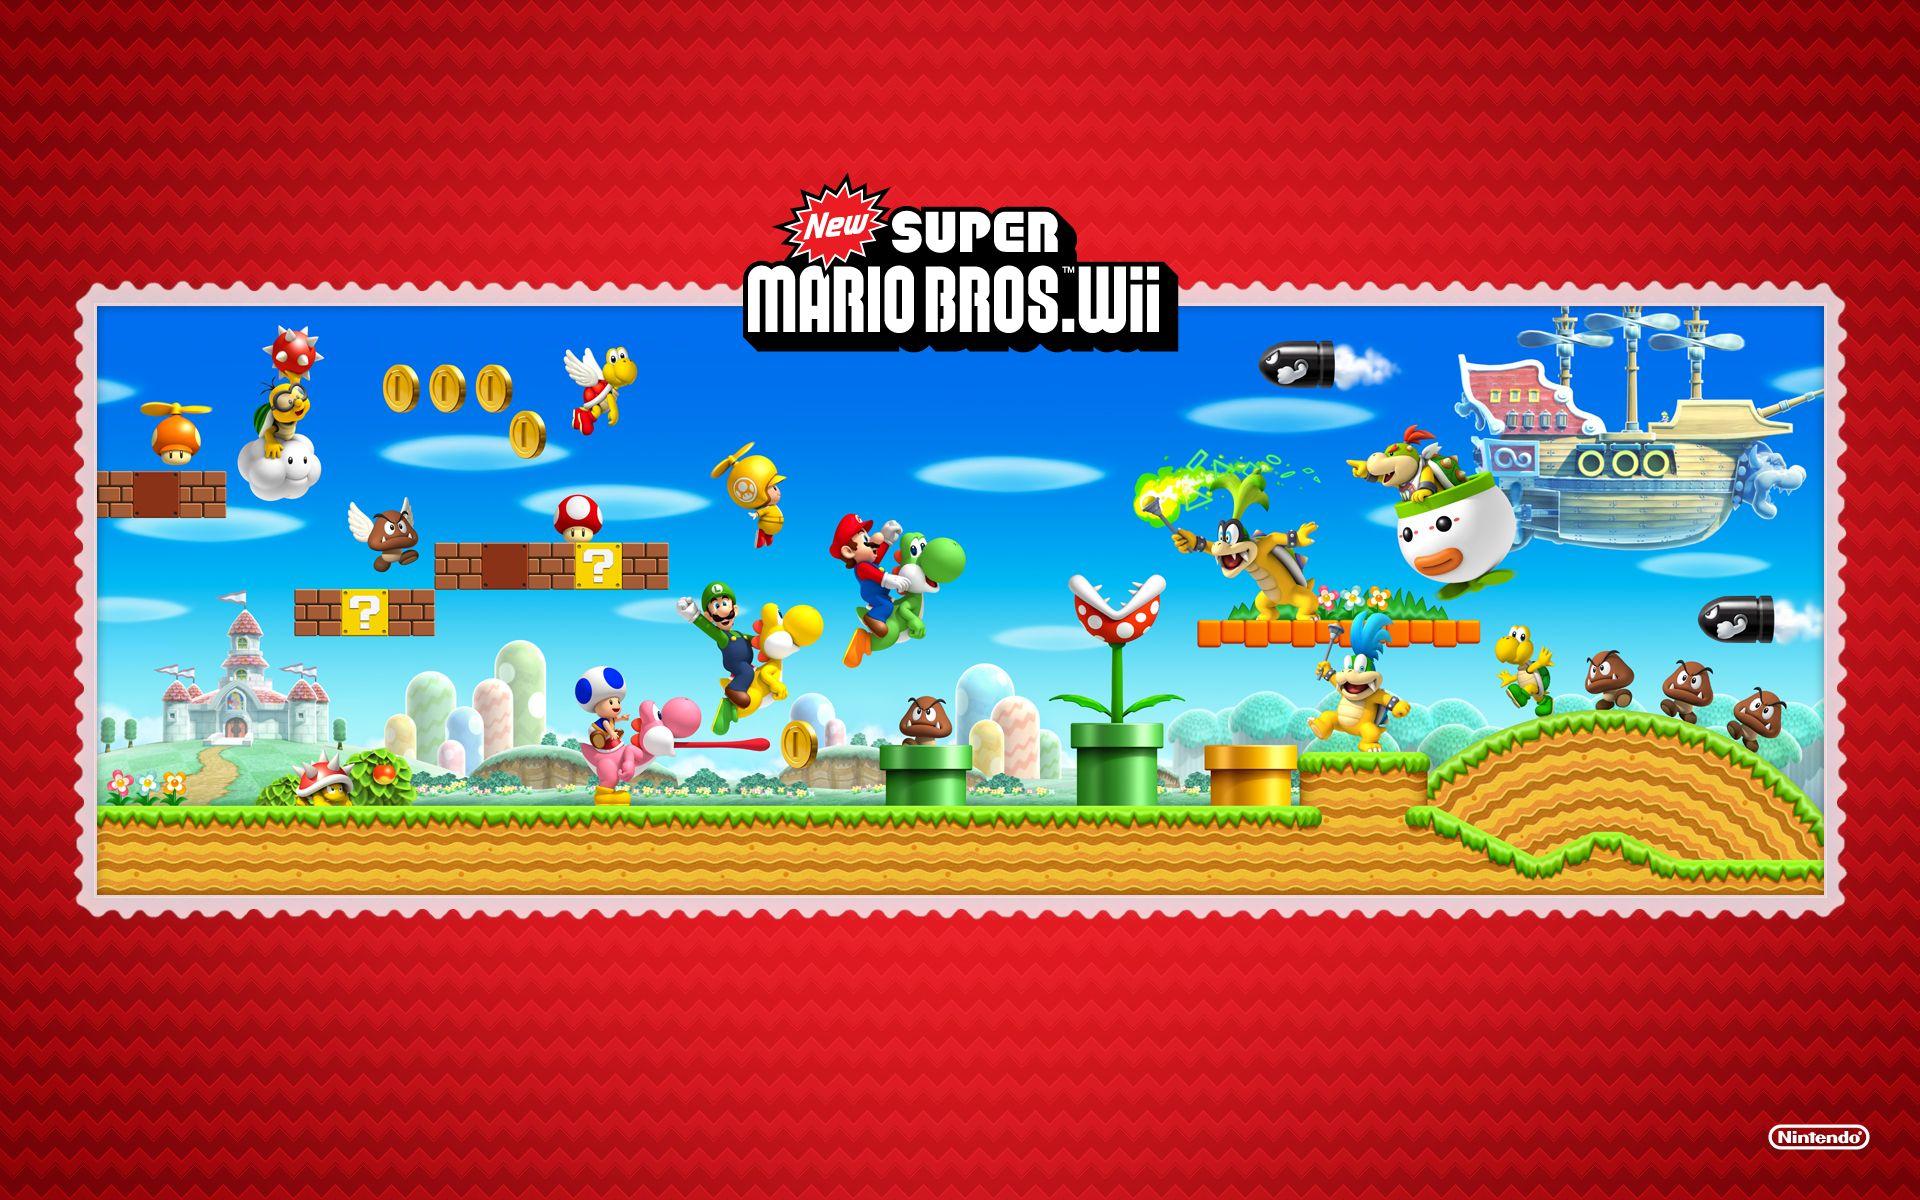 TMK. Downloads. Image. Wallpaper. New Super Mario Bros. Wii (Wii)